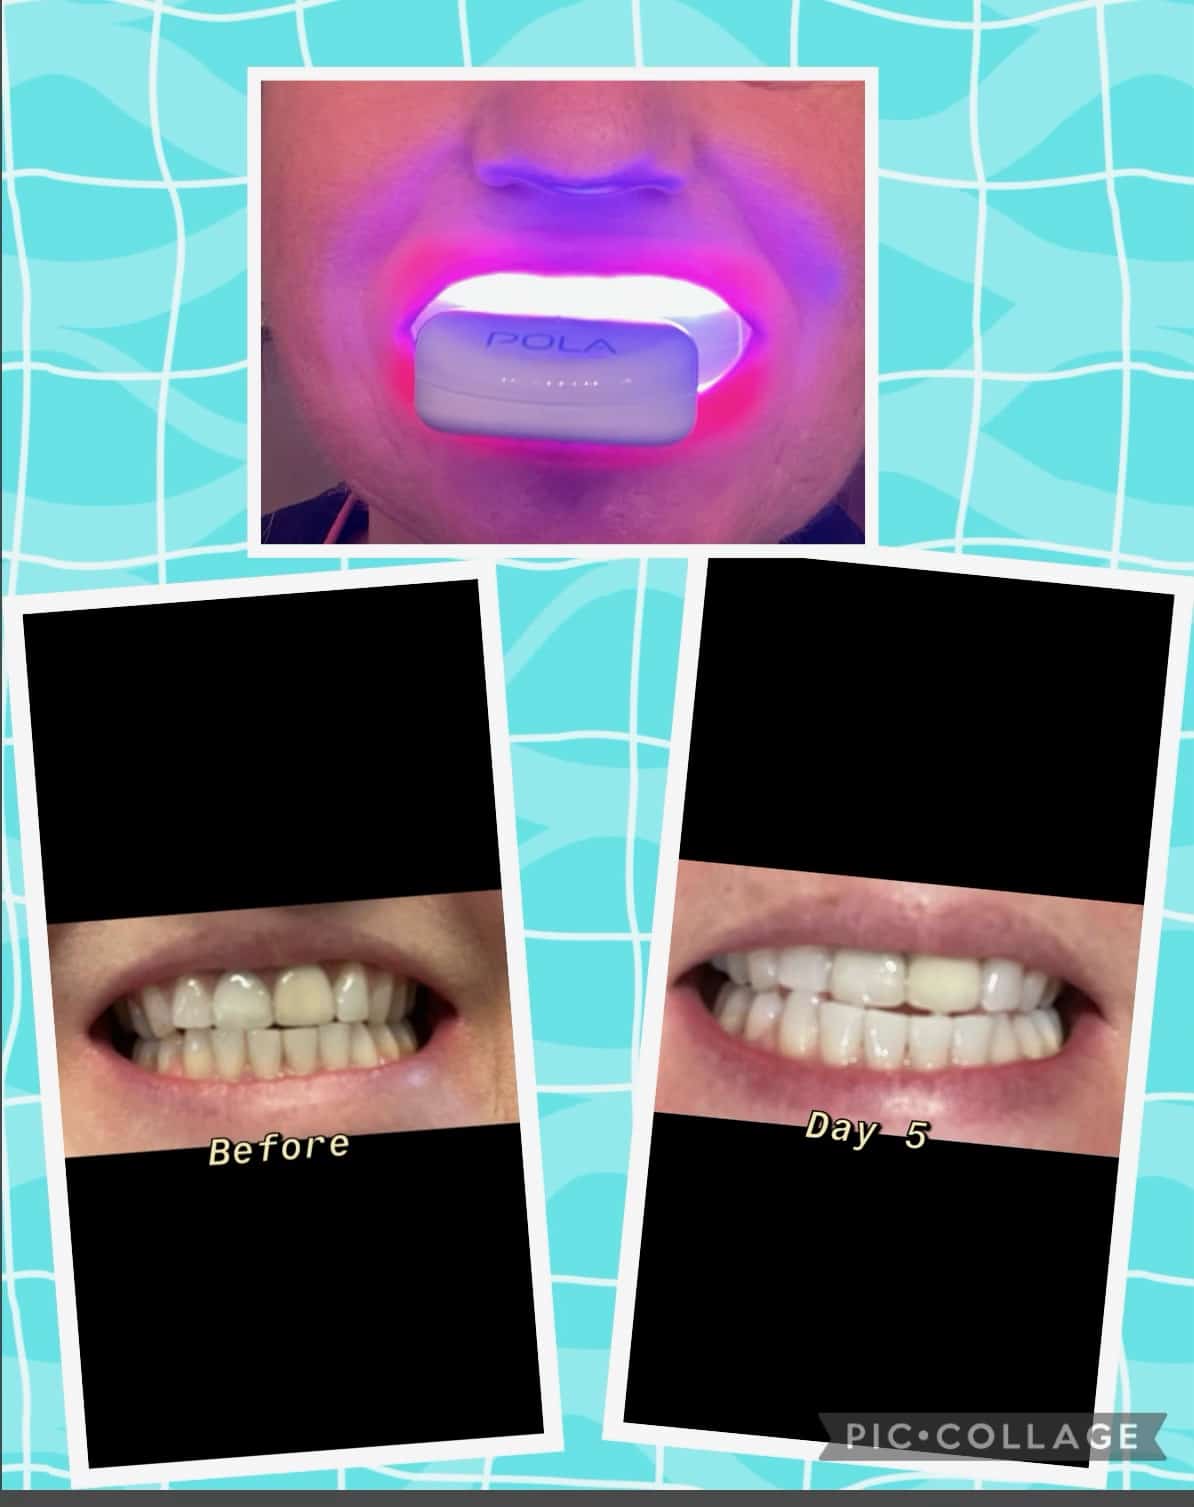 PolaLight Teeth Whitening